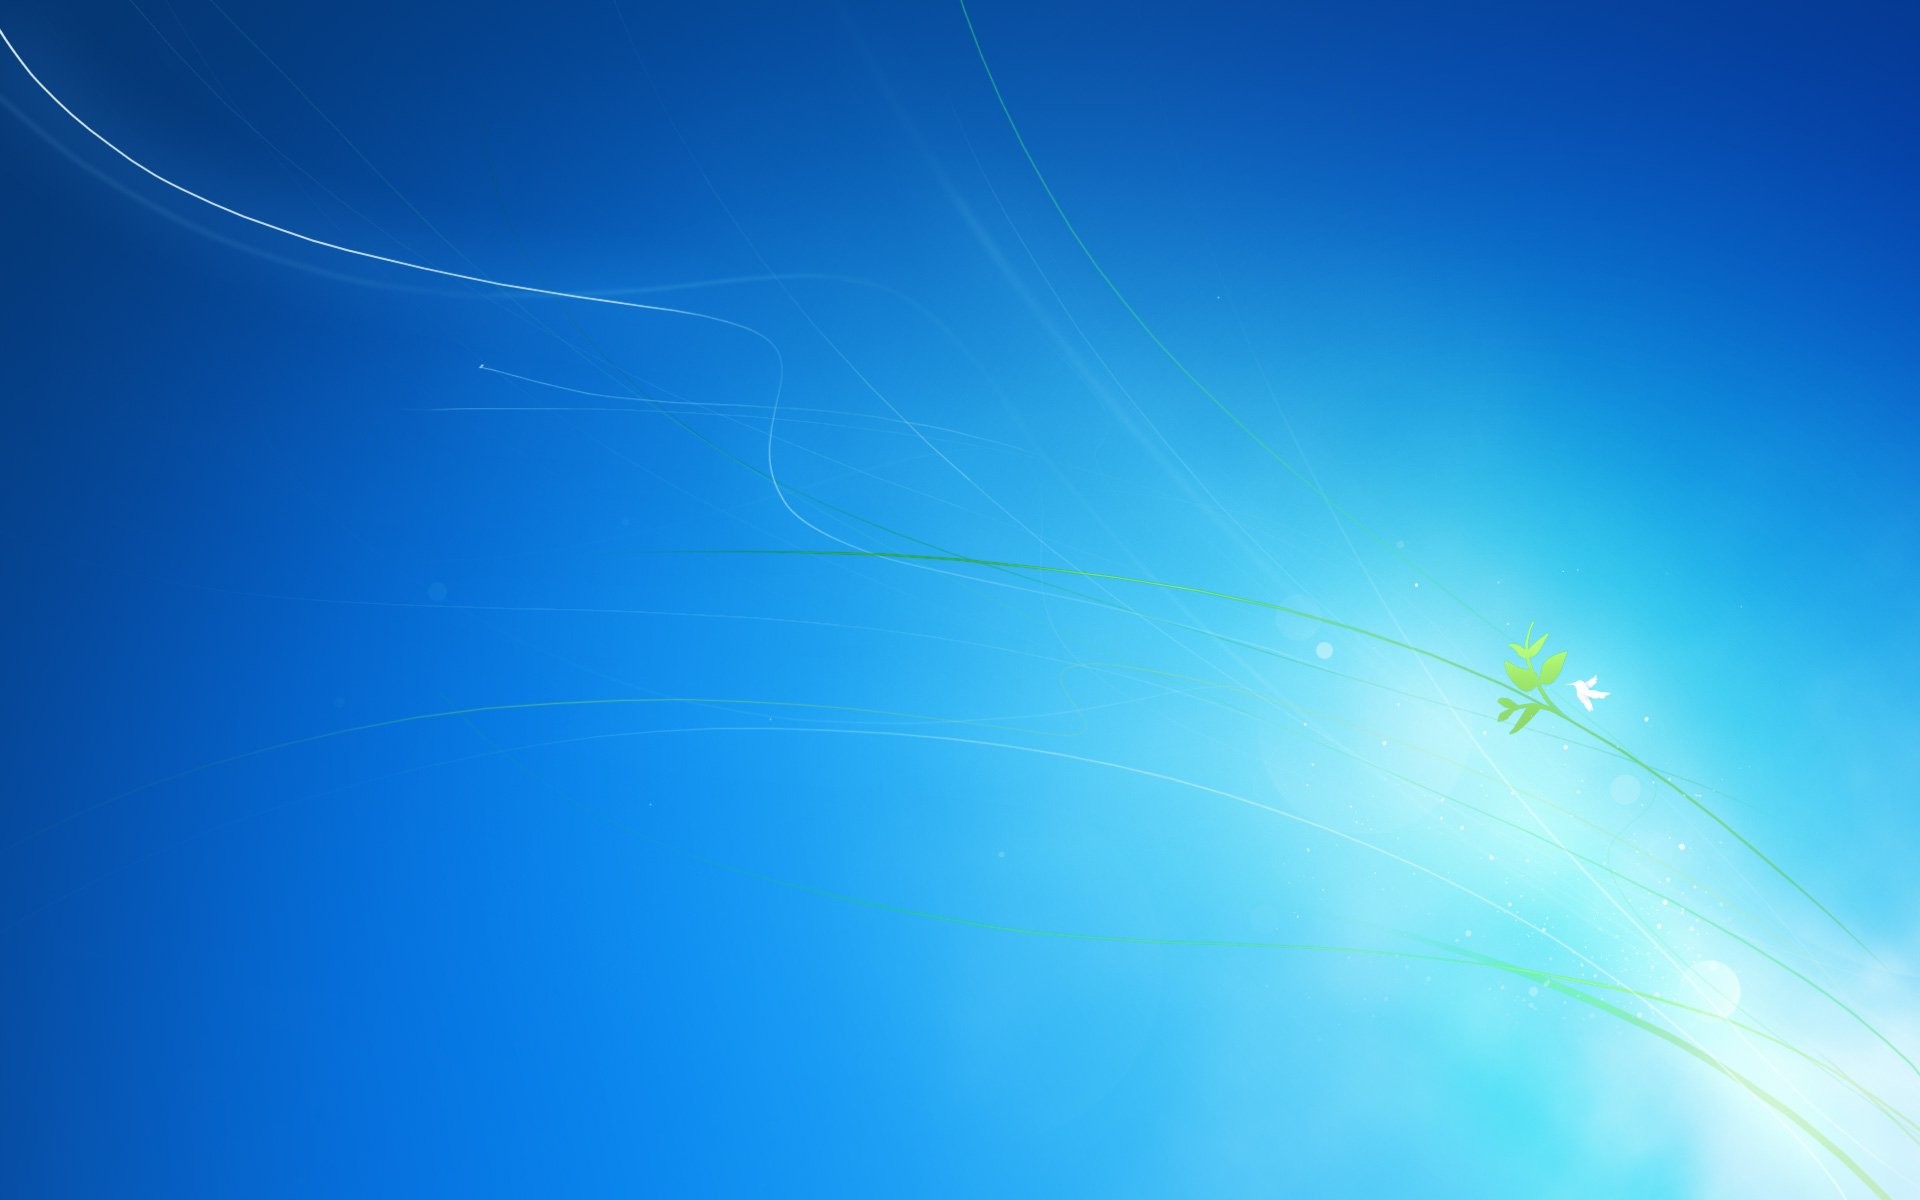 Windows Xp Screensaver For Windows : Windows 7 wallpaper blue 221992  walldevil